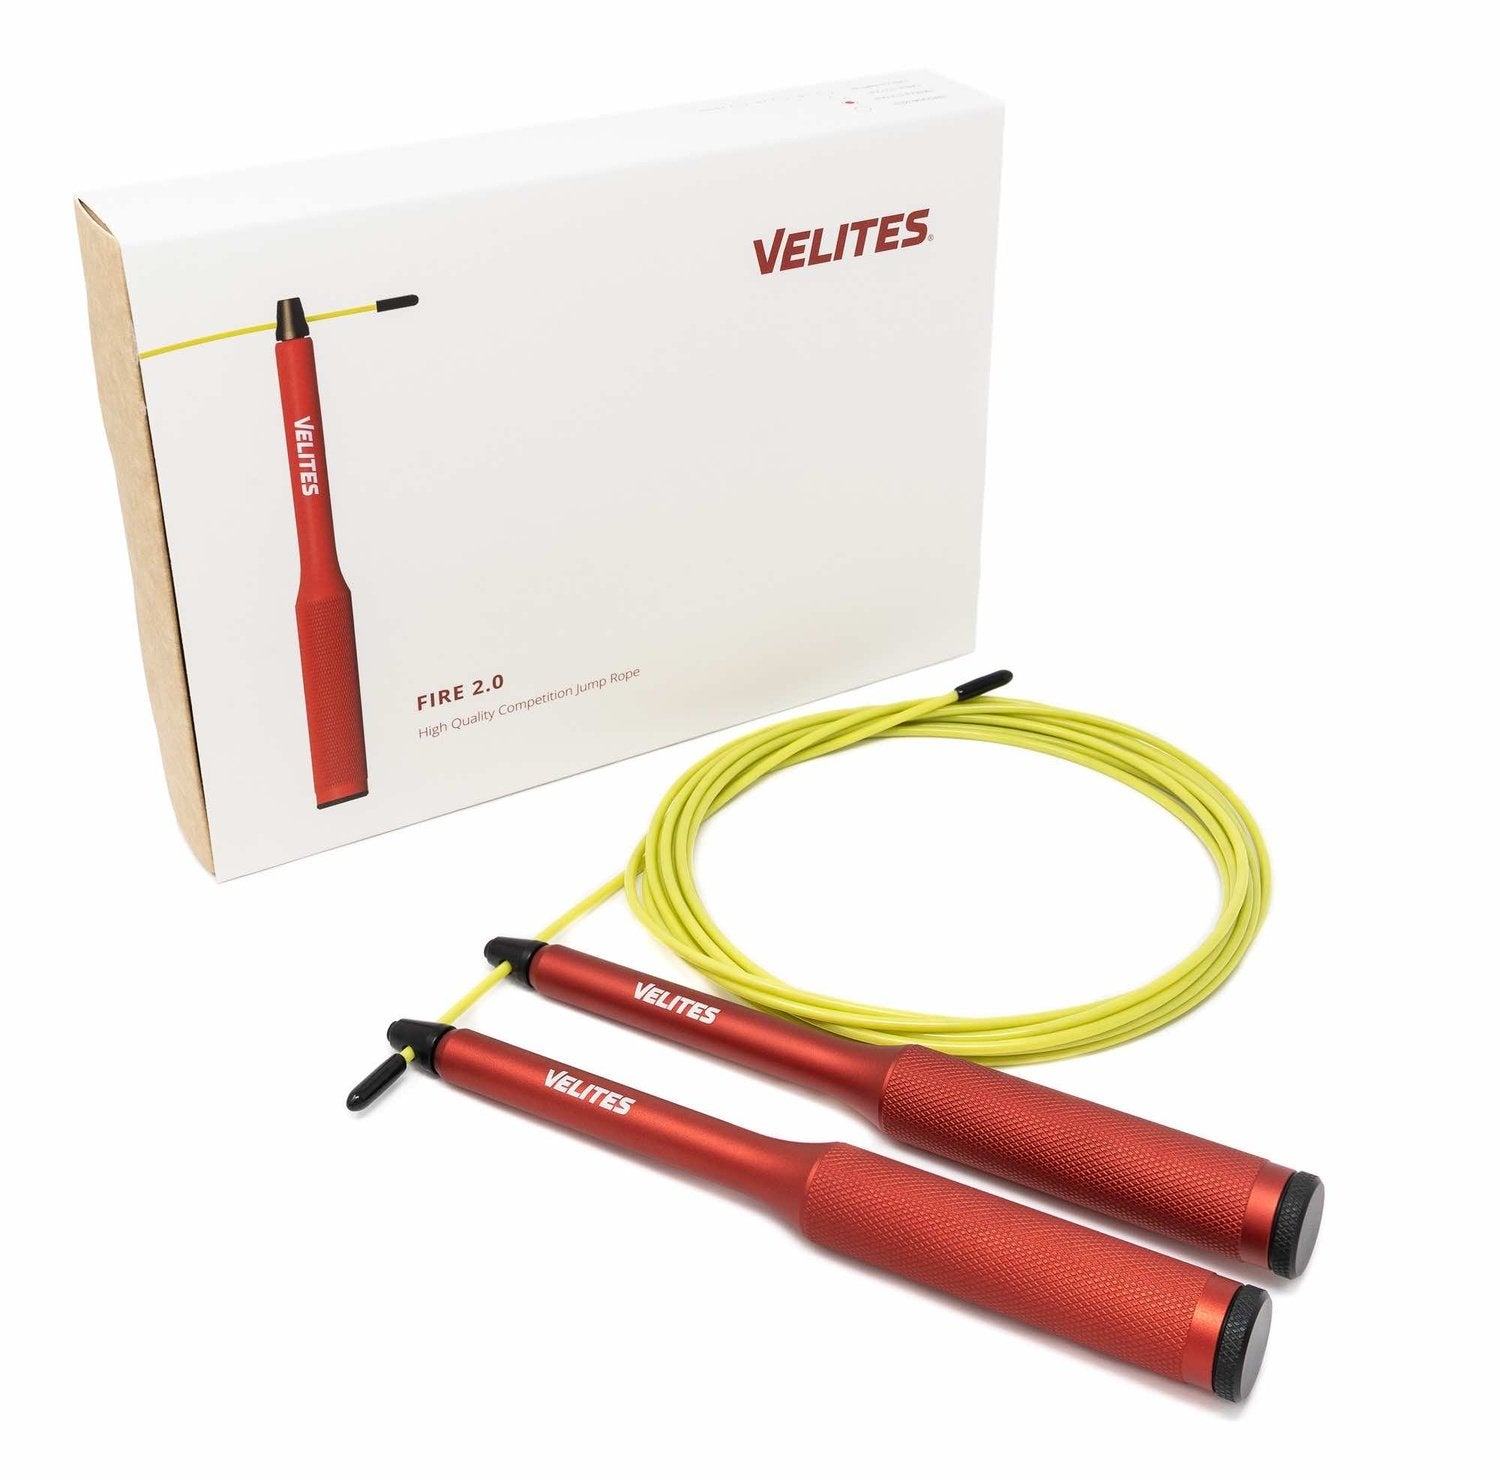 Velites Fire 2.0 Jump Rope (Wettkampfspringseil) Silber kaufen bei HighPowered.ch